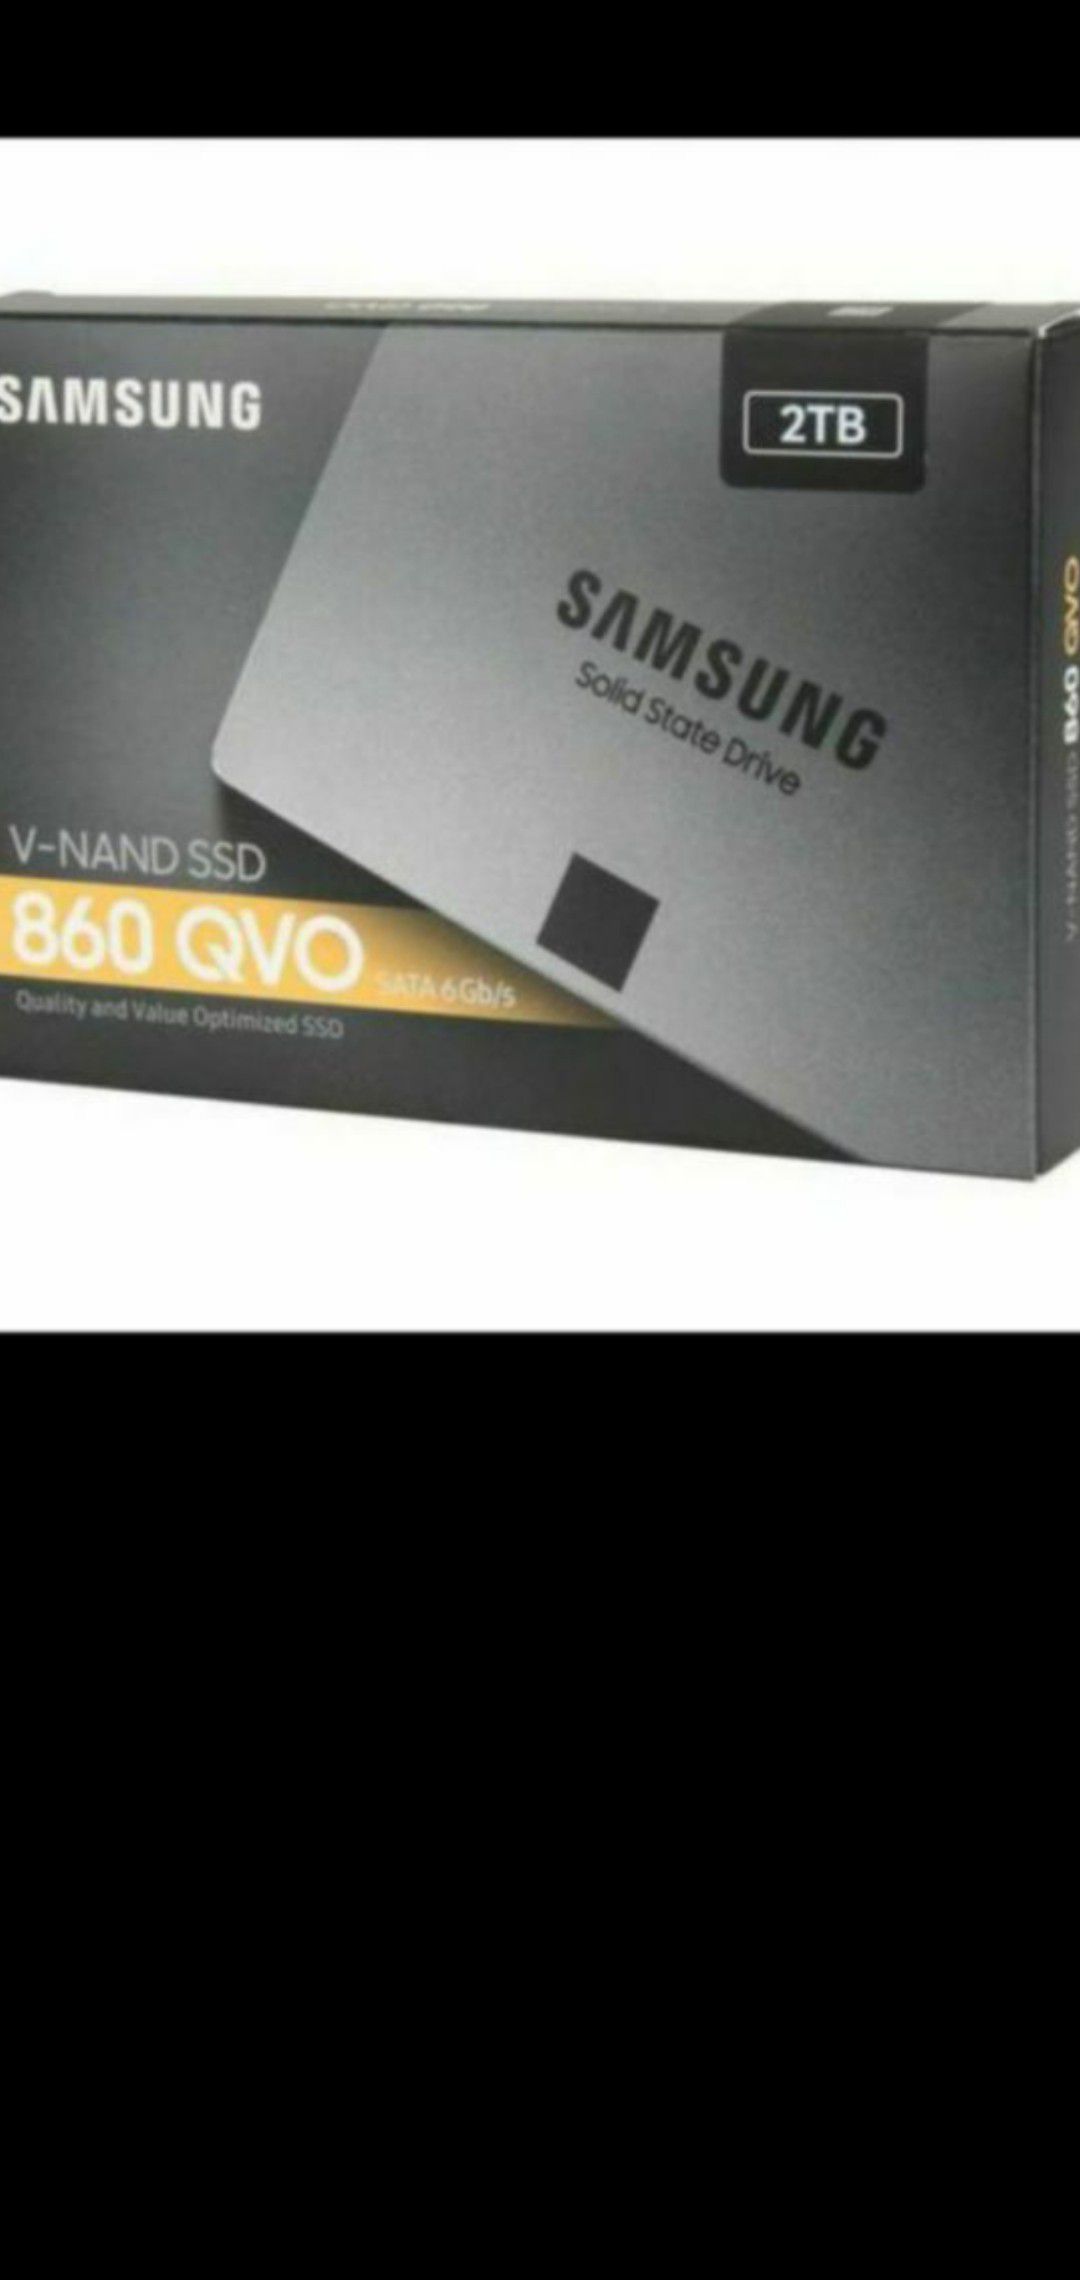 Samsung 860 QVO SSD 2TB - 2.5 Inch SATA 3 Internal Solid State Drive with V-NAND Technology (MZ-76Q2T0B/